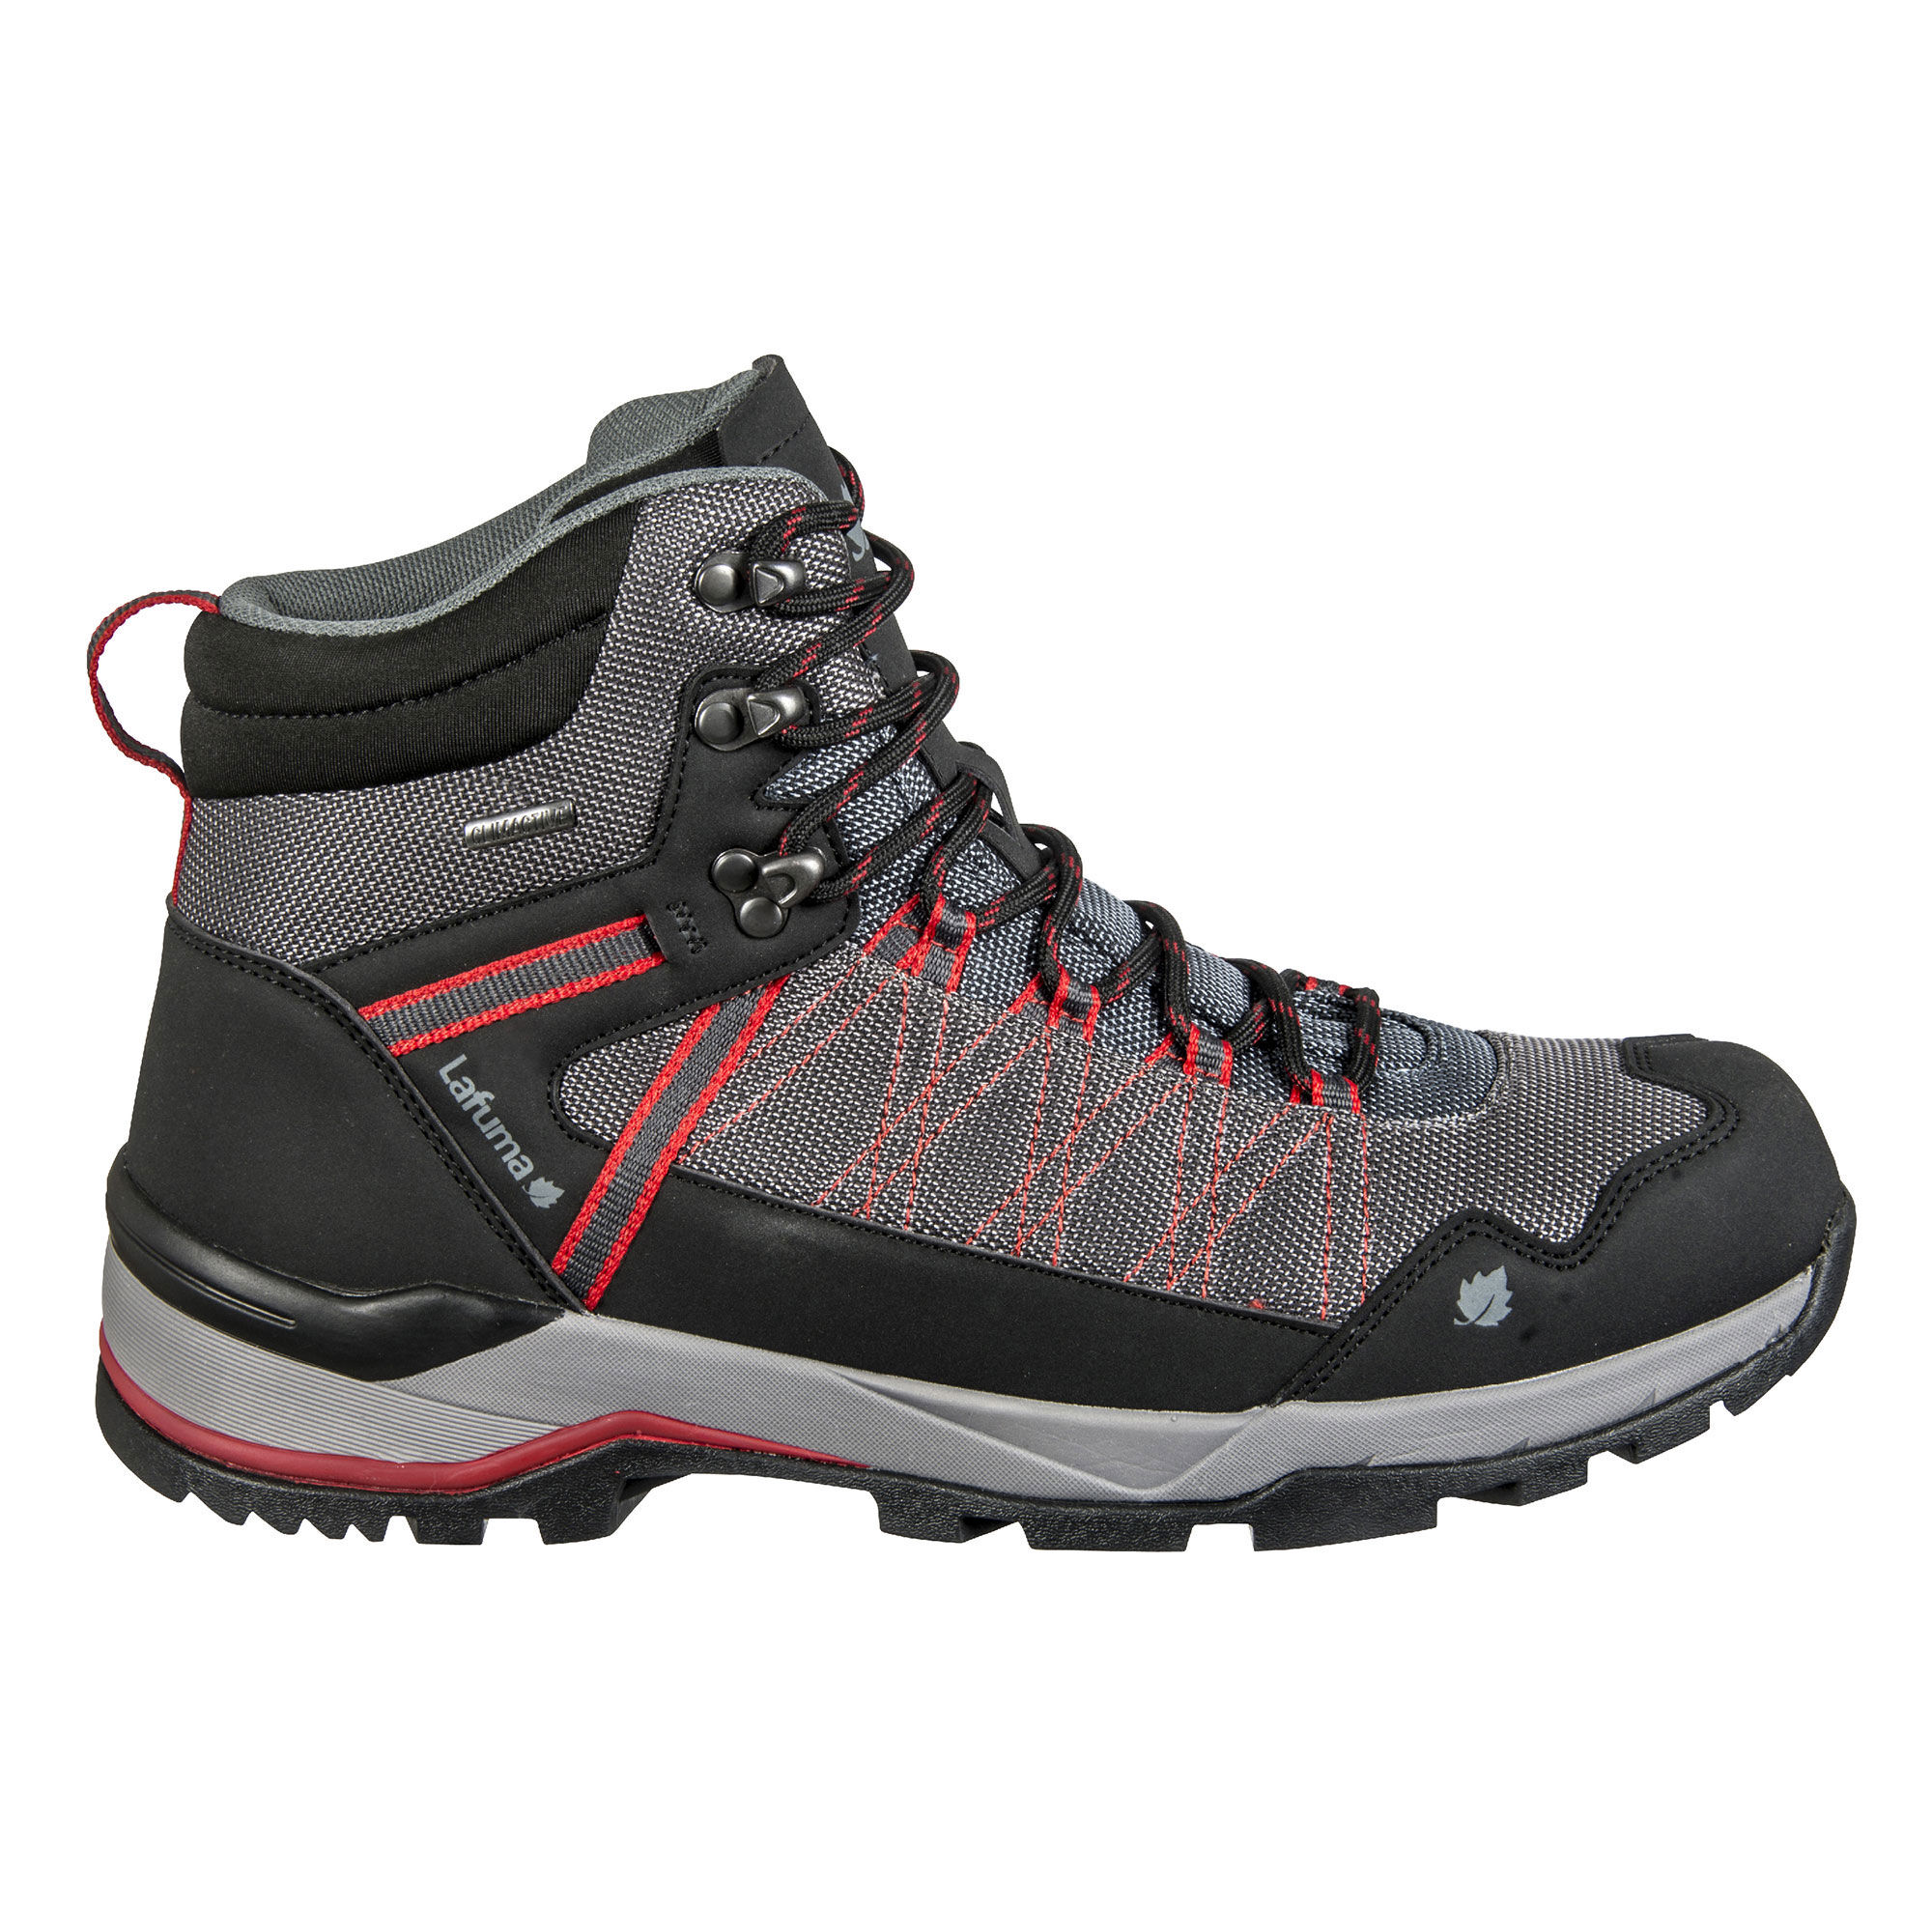 Lafuma Schiara M - Hiking Boots - Men's